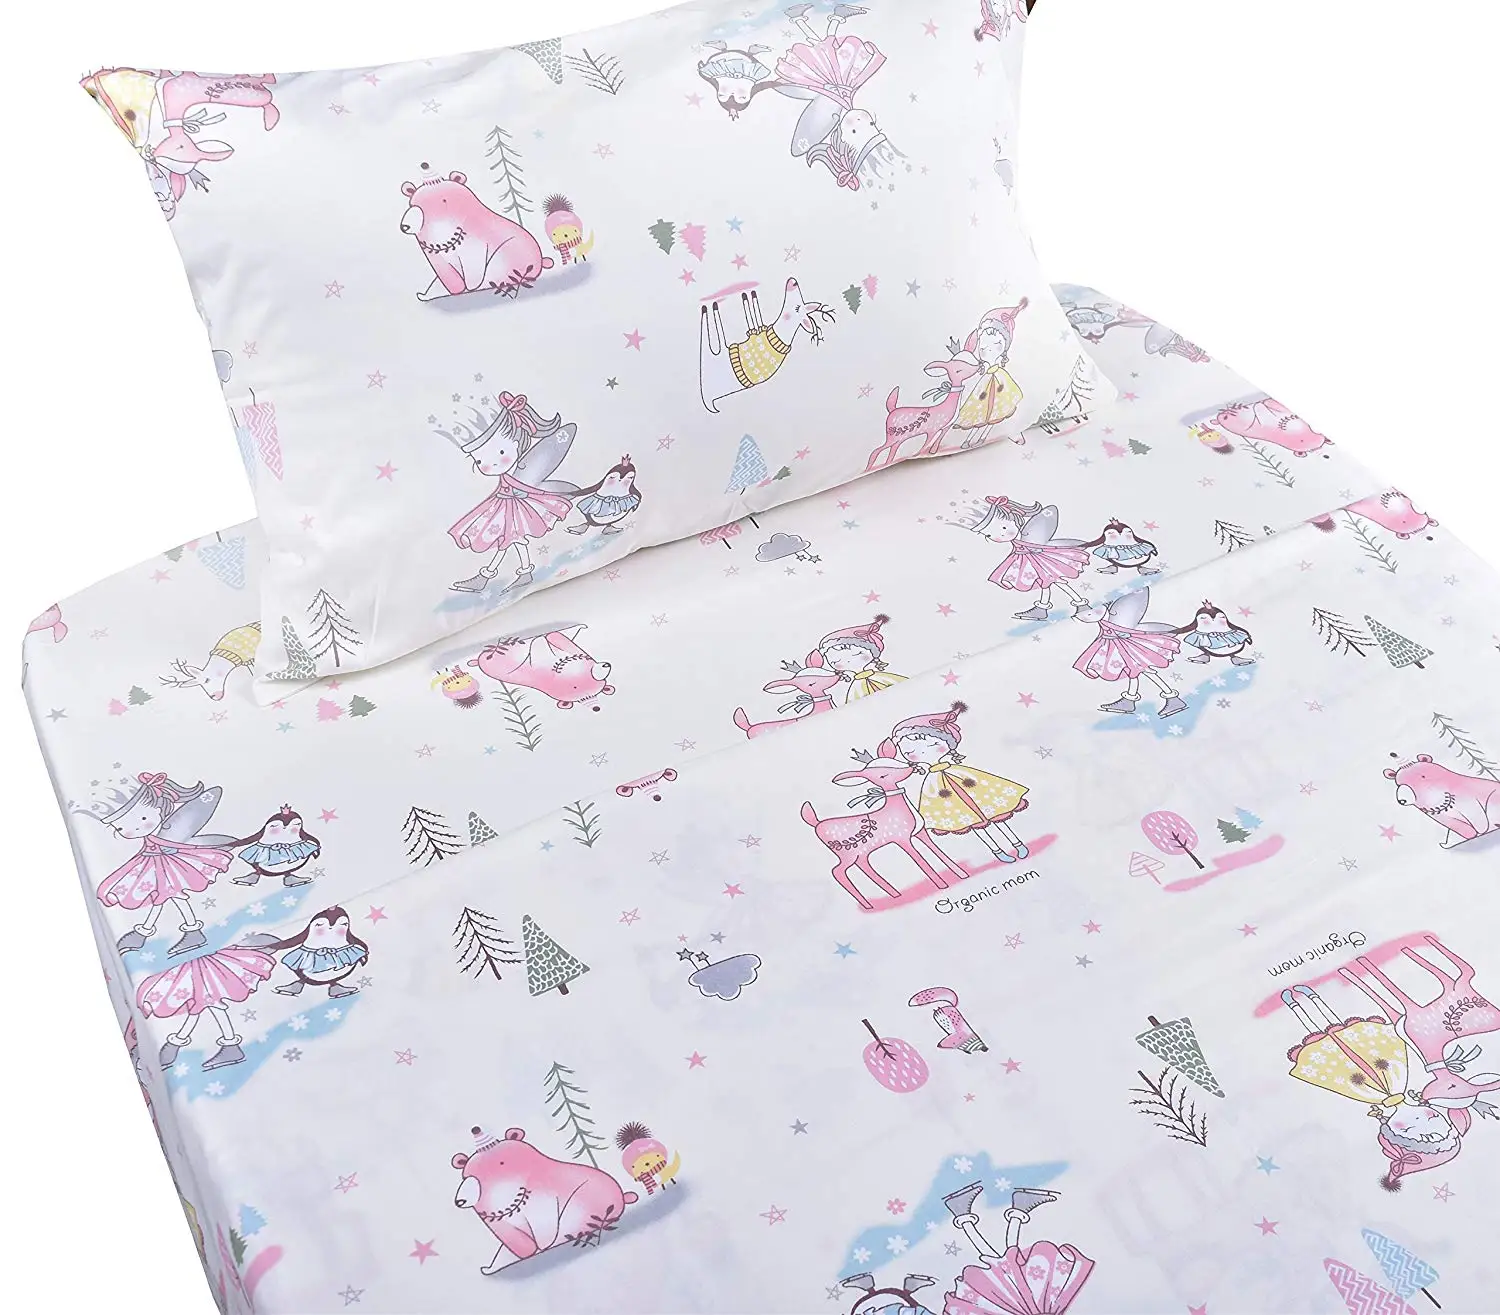 Scientific Sleep Cute Panda Cotton Cozy Twin Bed Sheet Set Flat Sheet /& Fitted Sheet /& Pillowcase Bedding Set 13, Twin